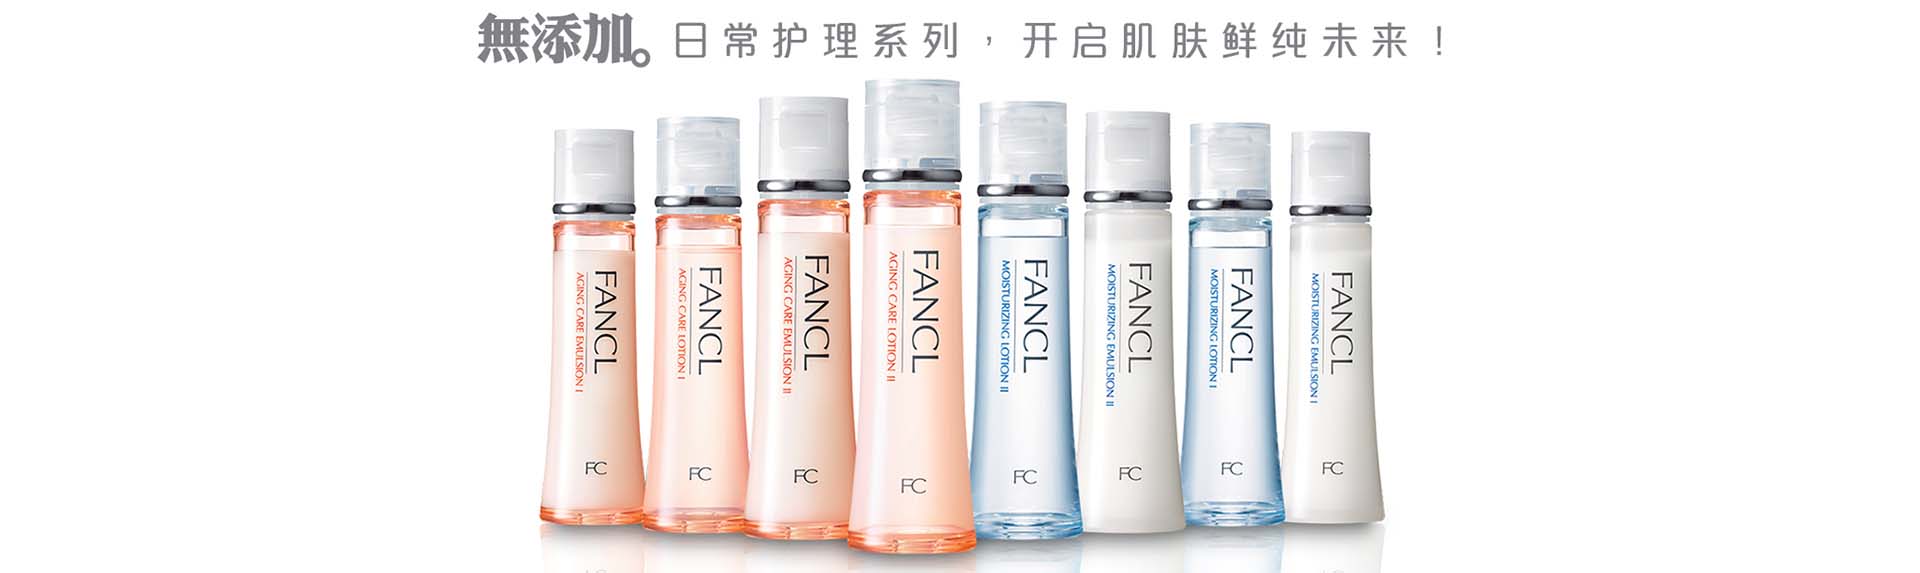 FANCL_化妆护肤品成分介绍_芳珂是哪个国家的品牌_是什么牌子